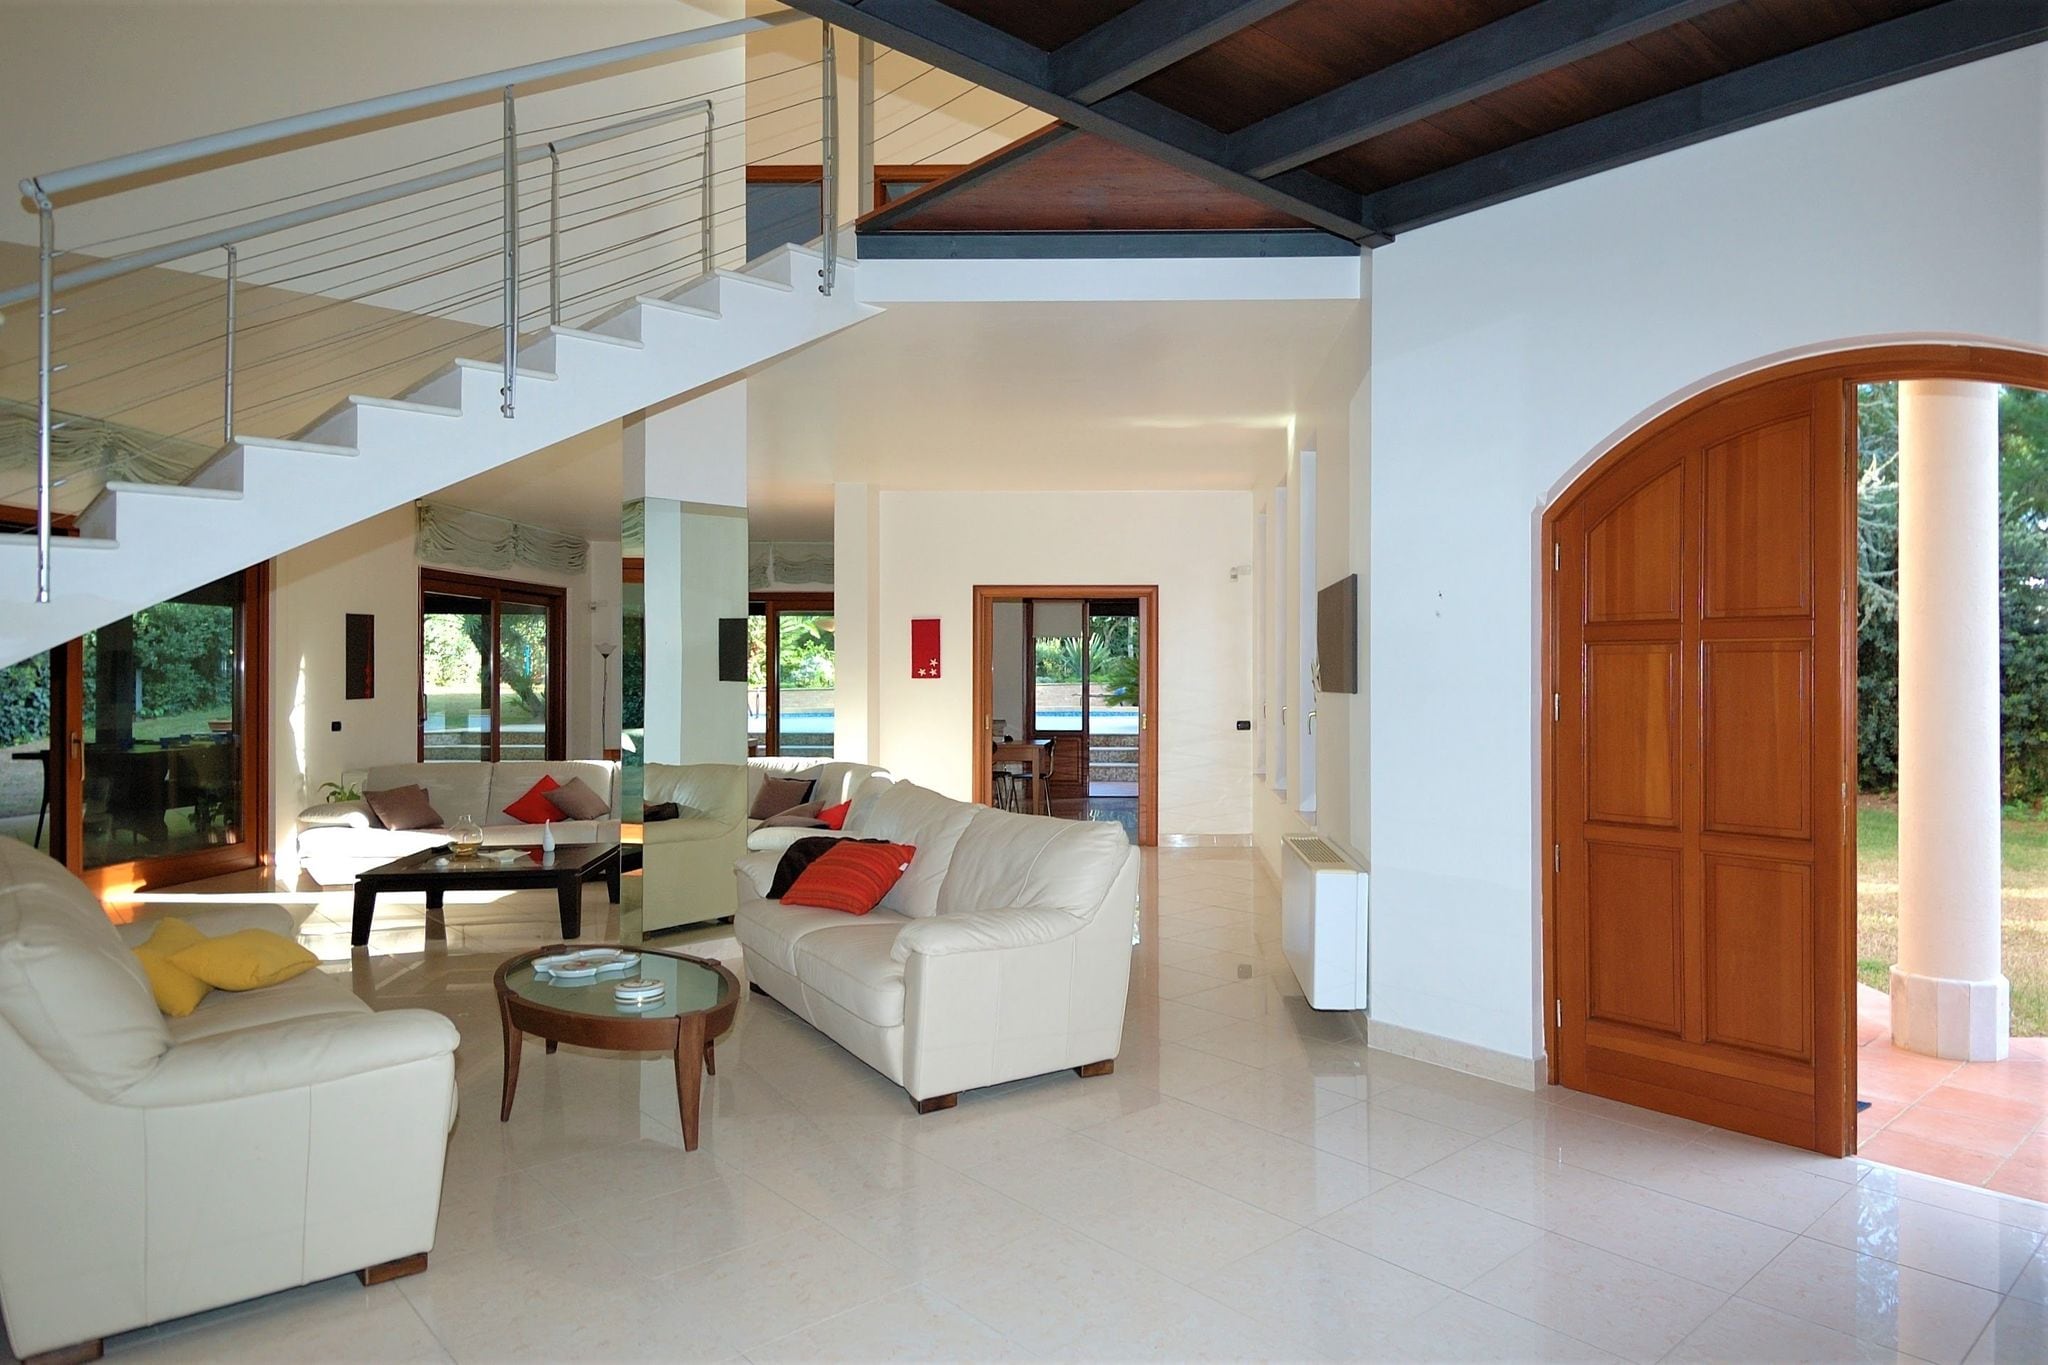 Superb, luxurious, spacious villa with privatepool and spacious garden near sea.